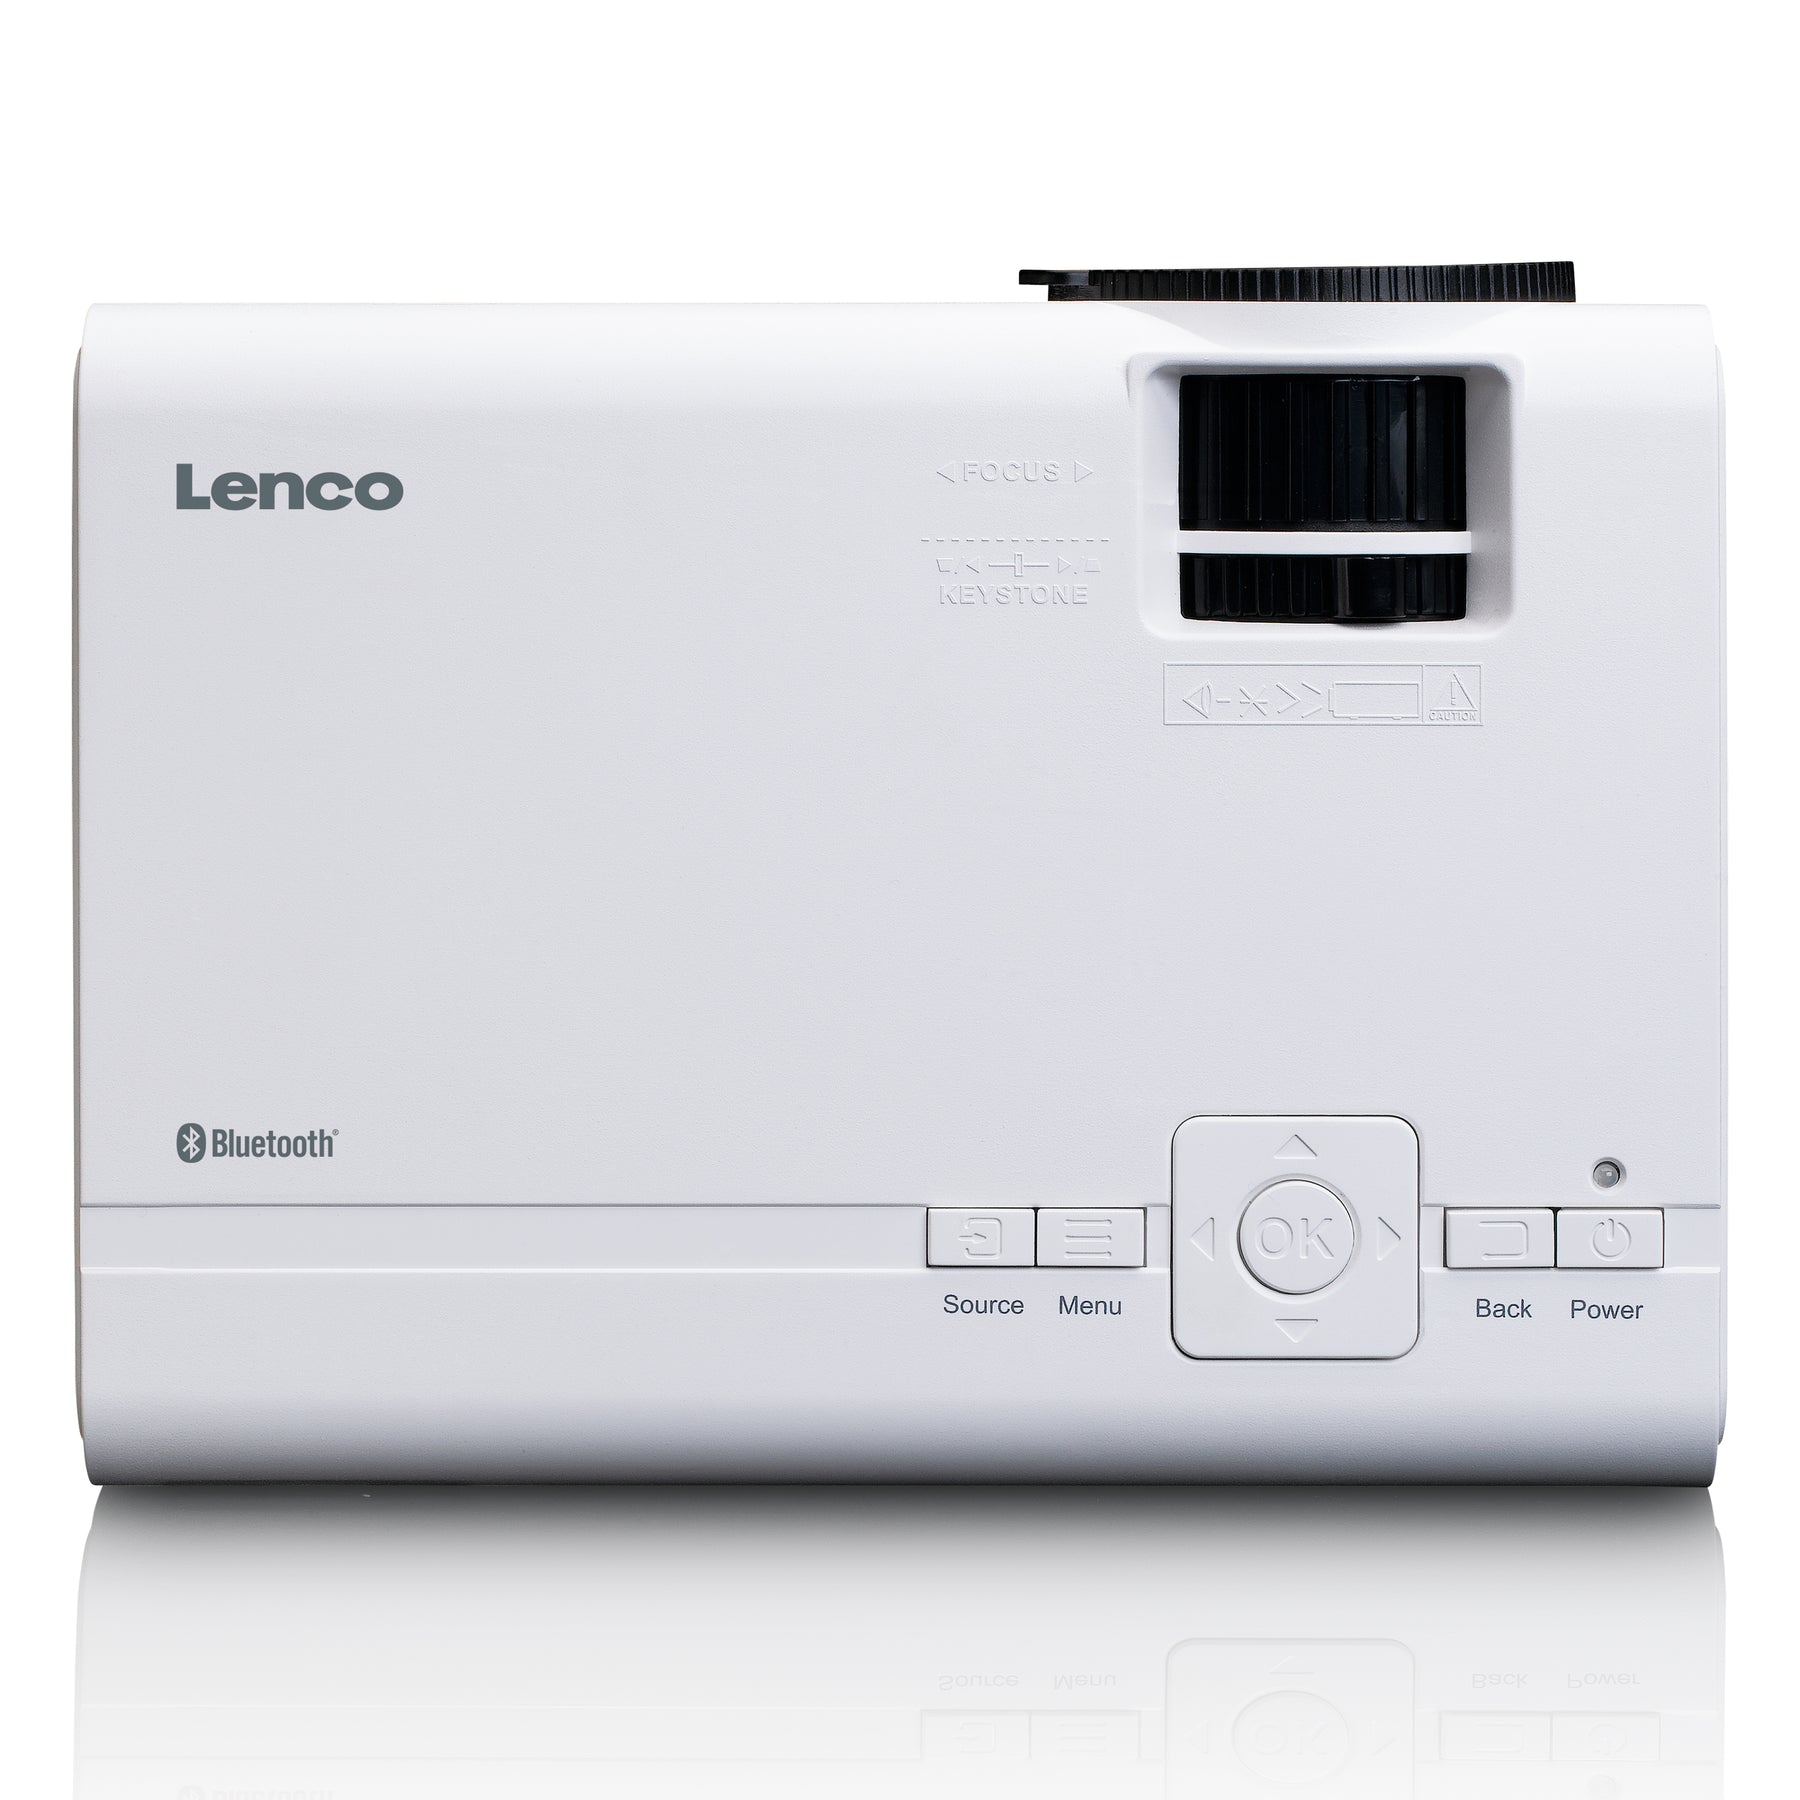 Lenco LPJ-700BKGY kaufen?  Jetzt im offiziellen Lenco Webshop